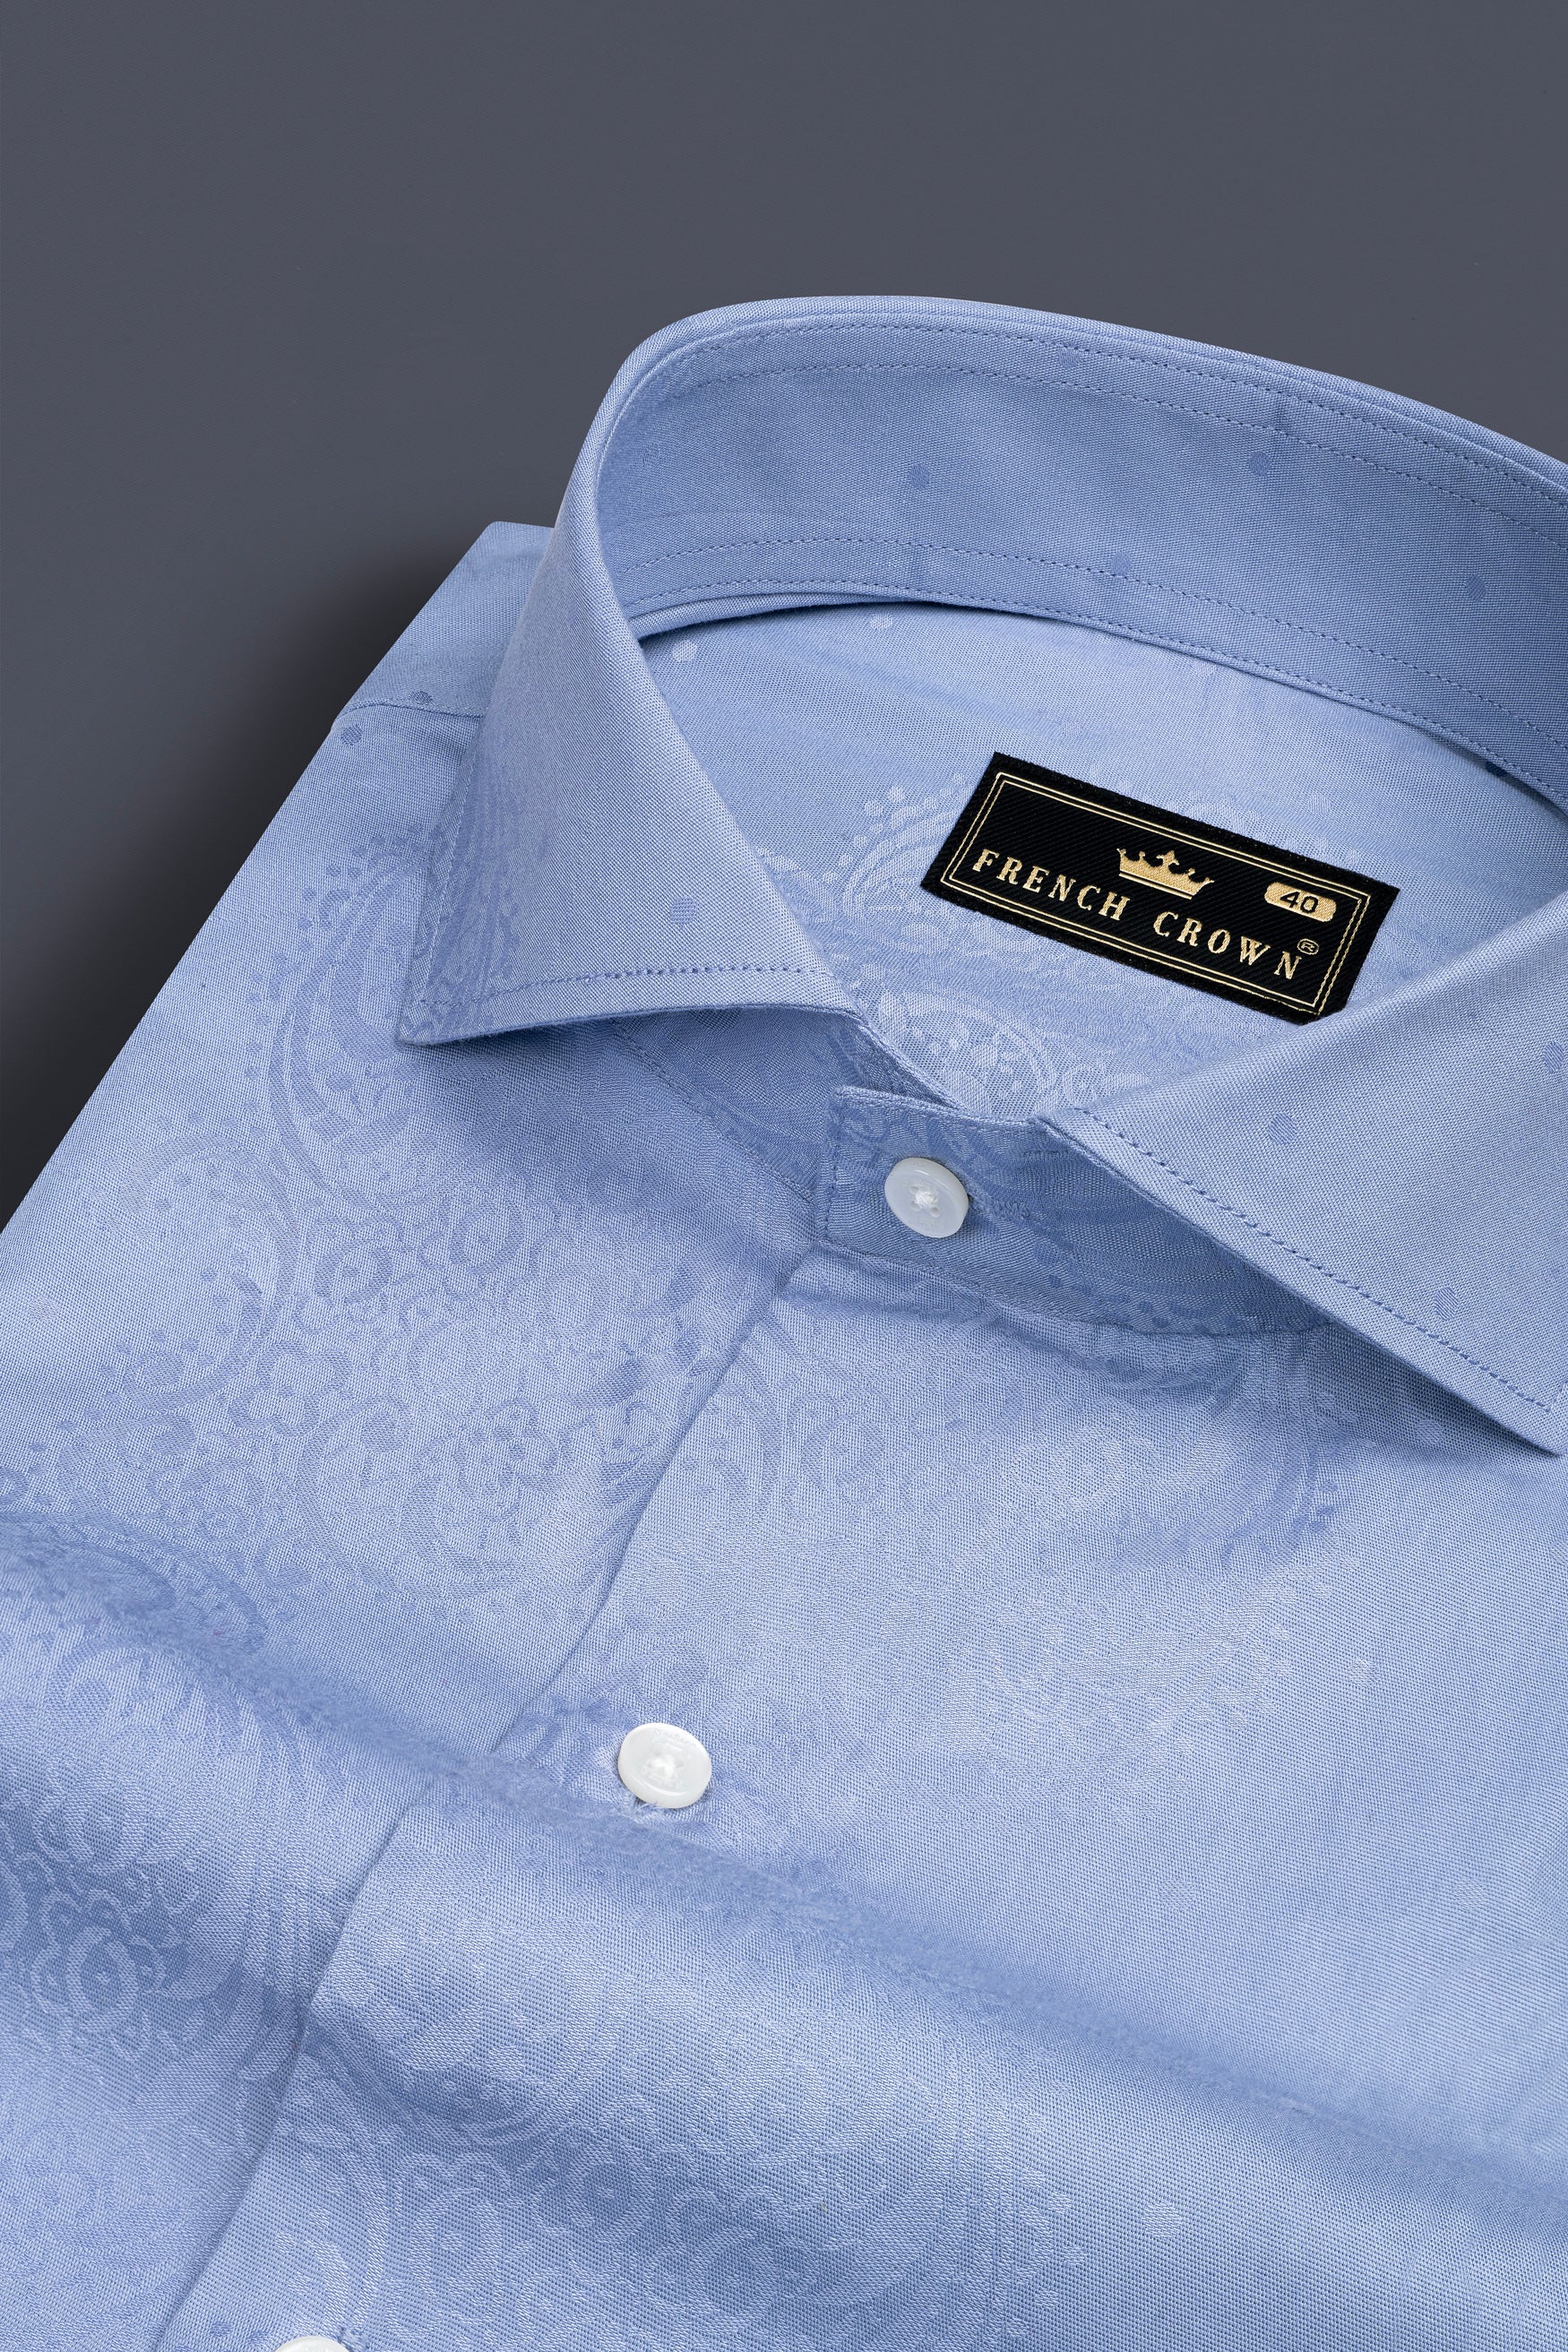 Polo Blue paisley Printed jacquard Premium Giza Cotton Shirt